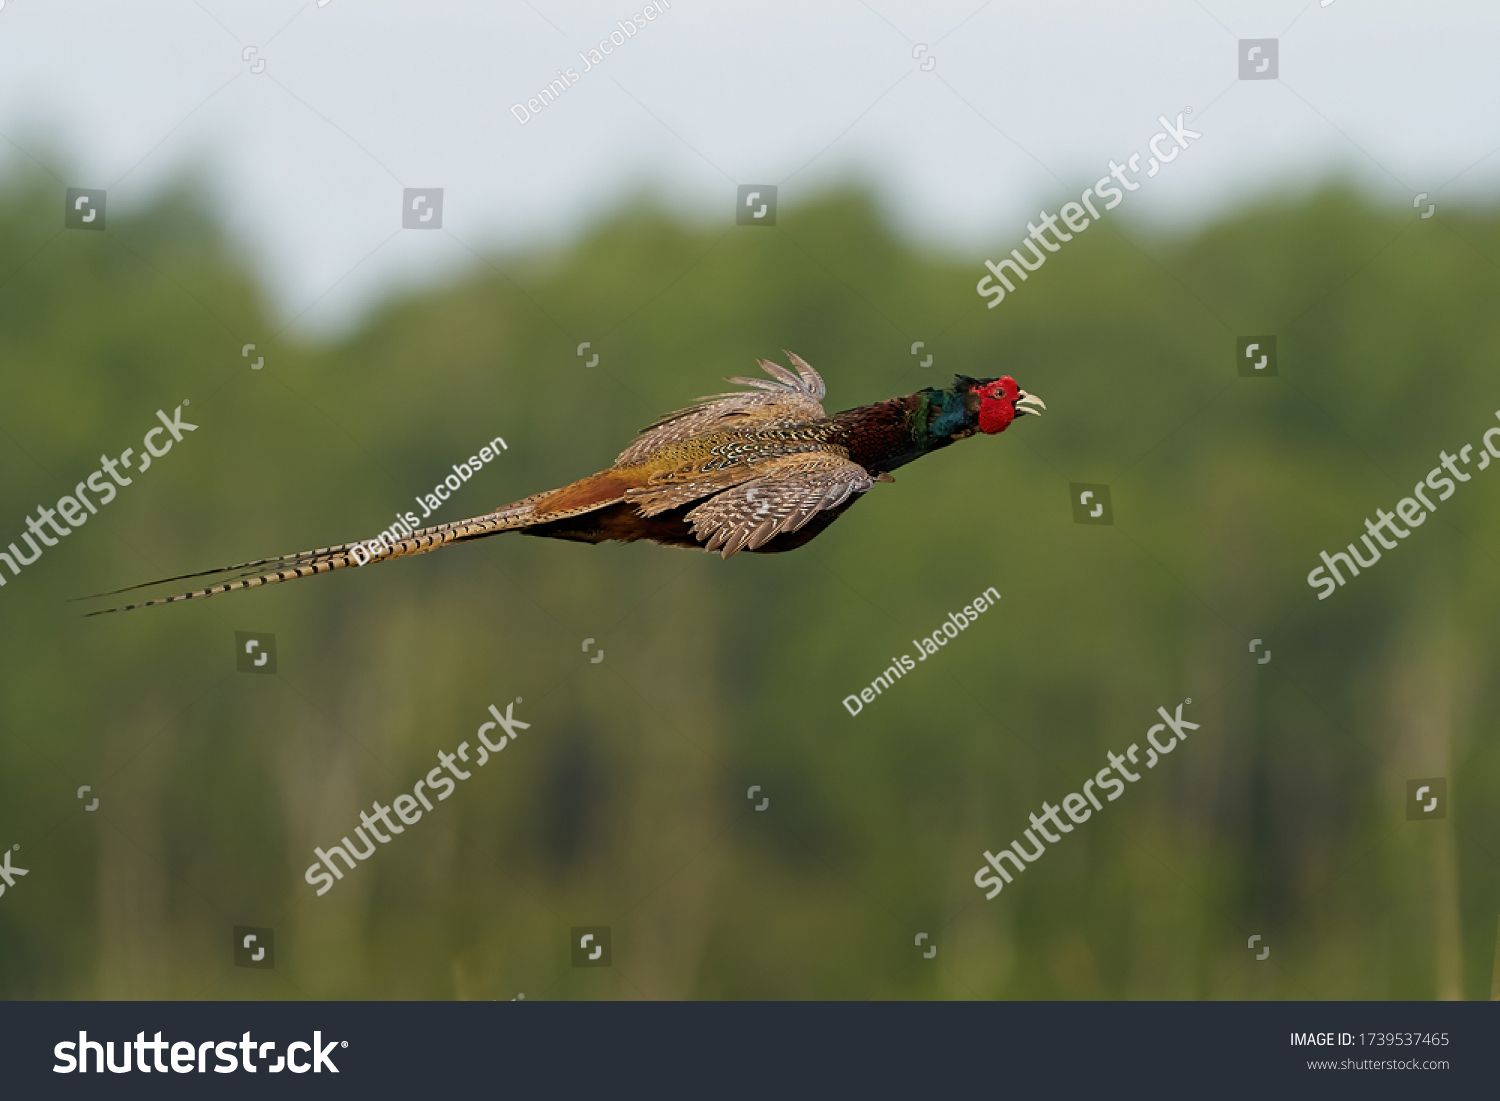 Common pheasant (Phasianus colchicus) in flight in its natural enviroment #1739537465